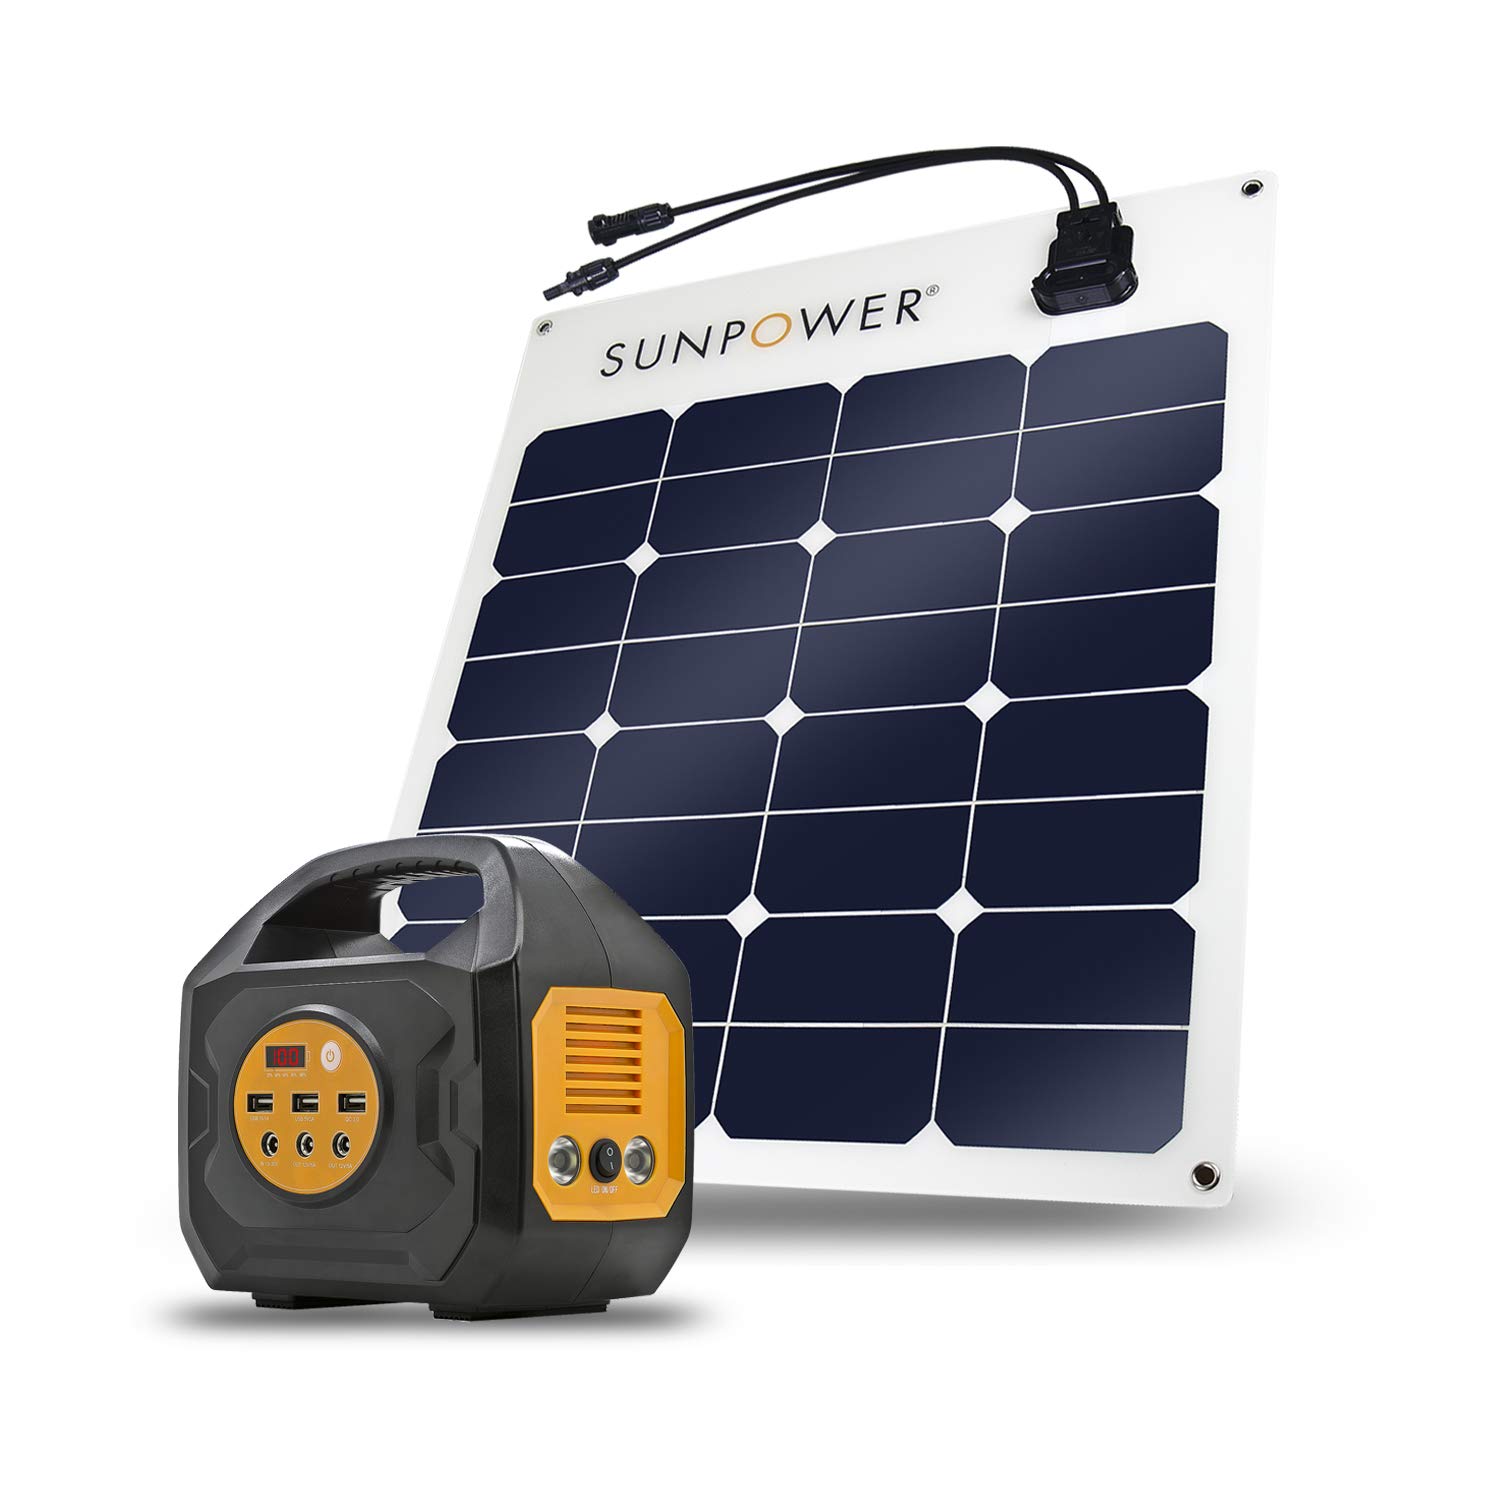 ExpertPower S200 Solar Generator with SunPower 50W